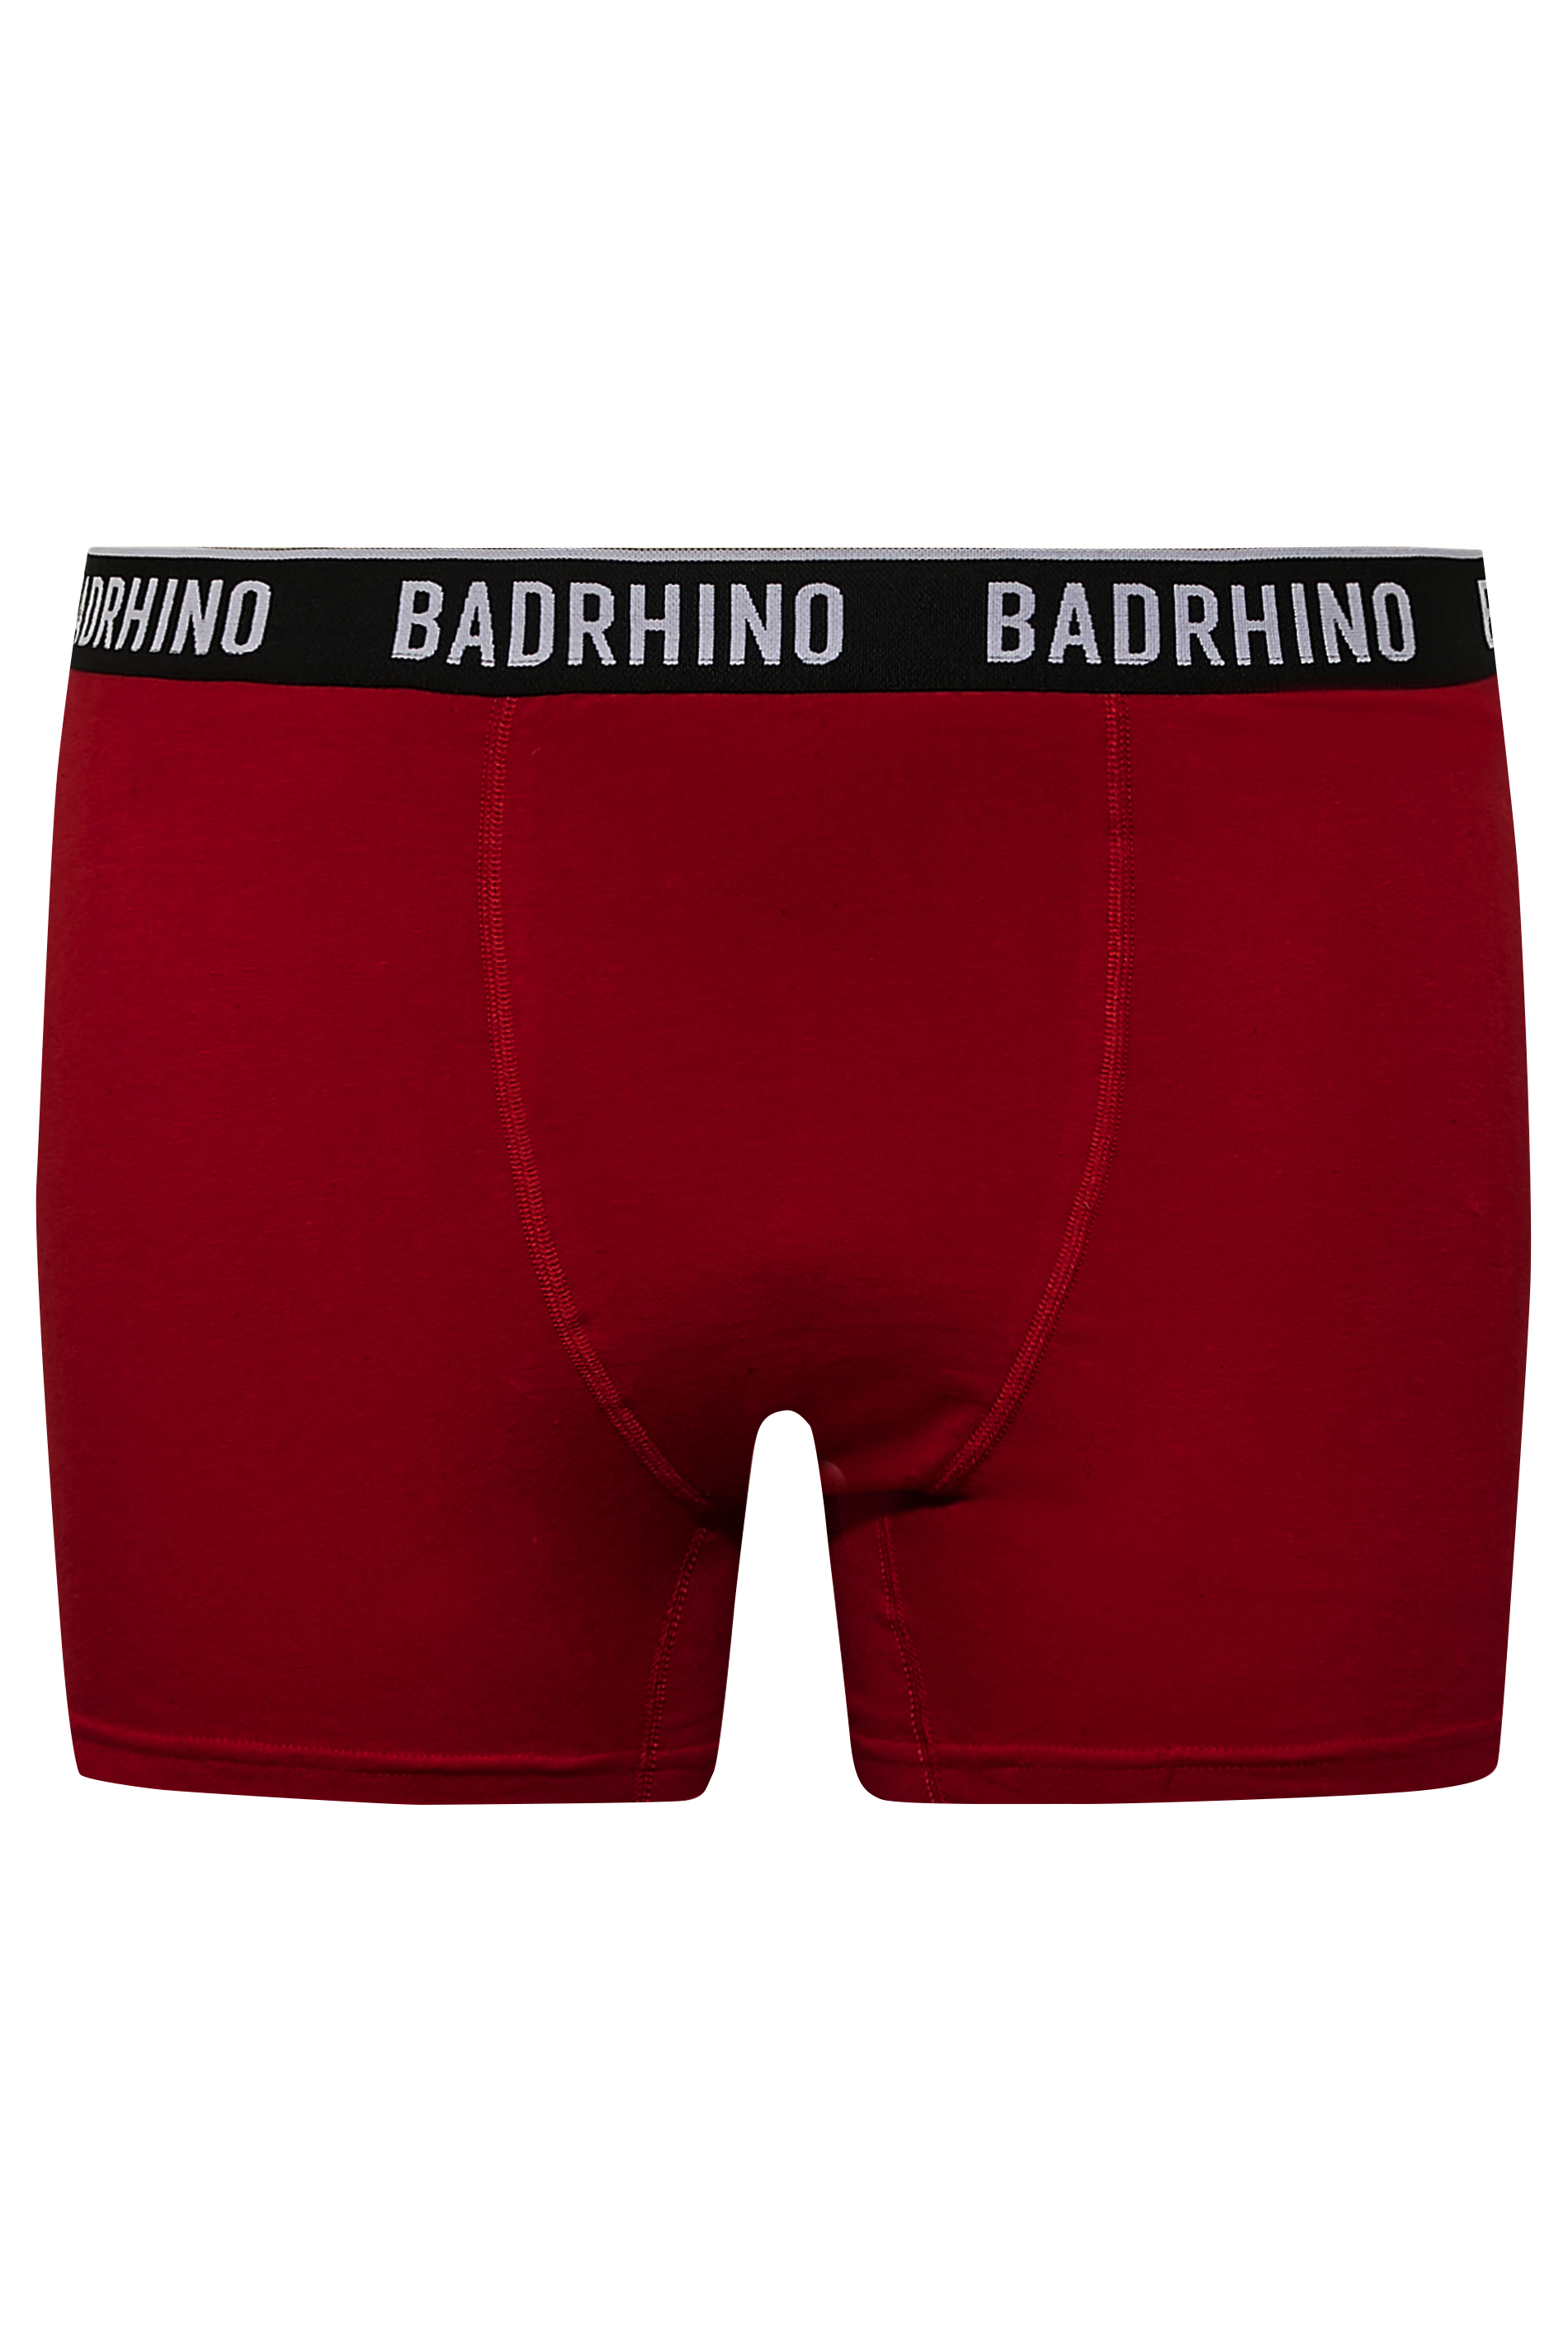 BadRhino Big & Tall 3 PACK Black Boxers